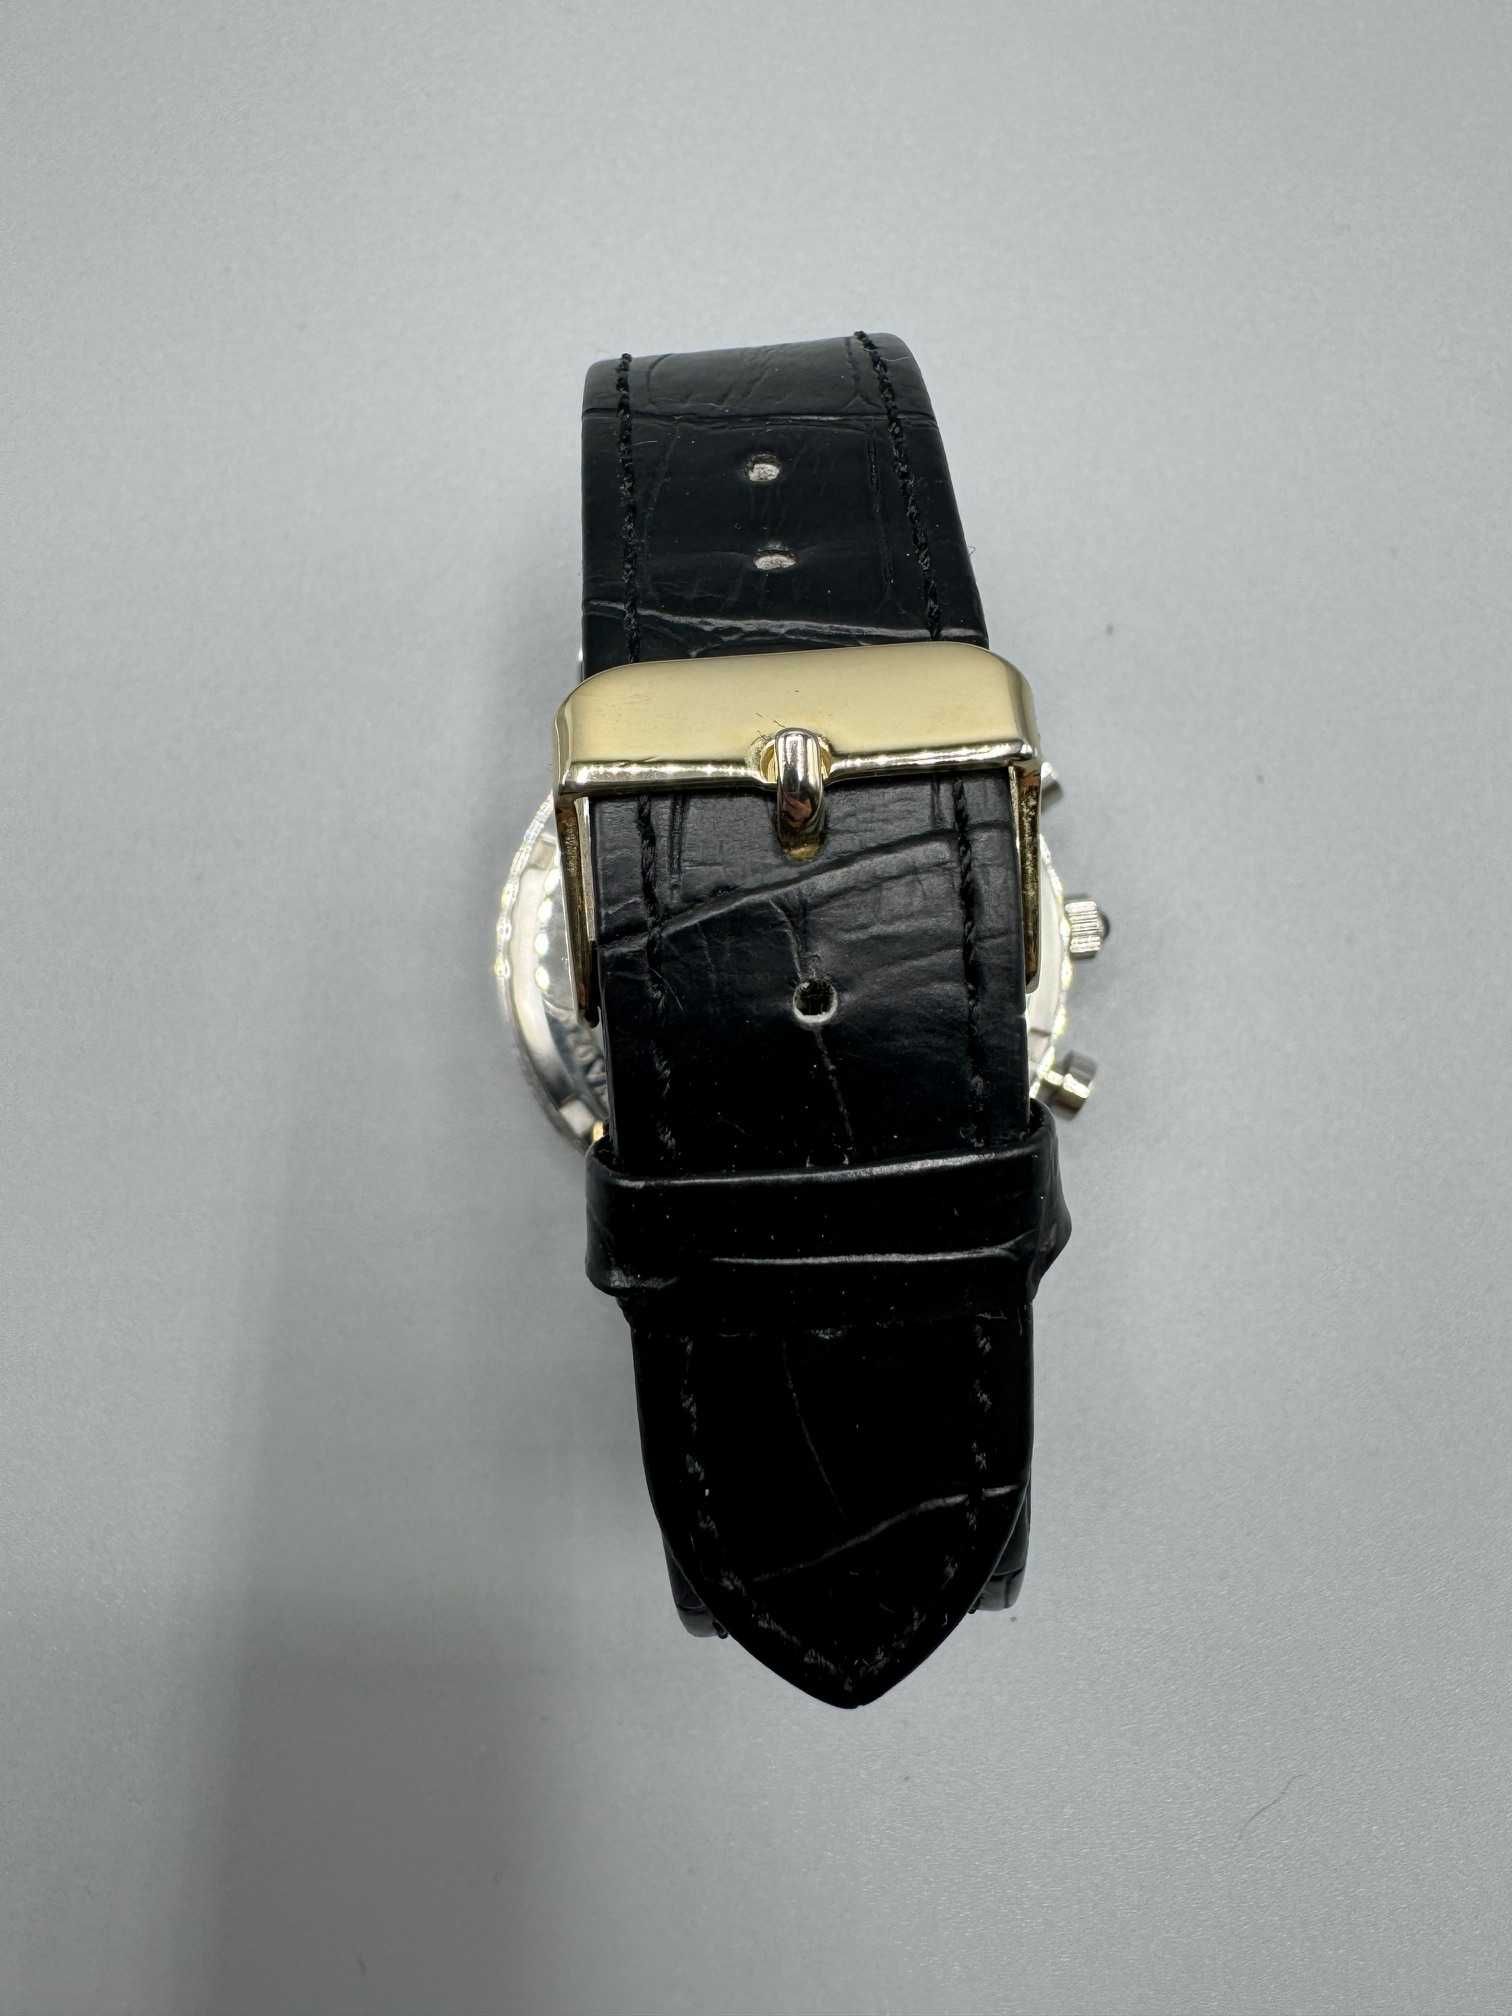 Zegarek THOMAS SABO REBEL SPIRIT CHRONO WA0284 od loombard milicz